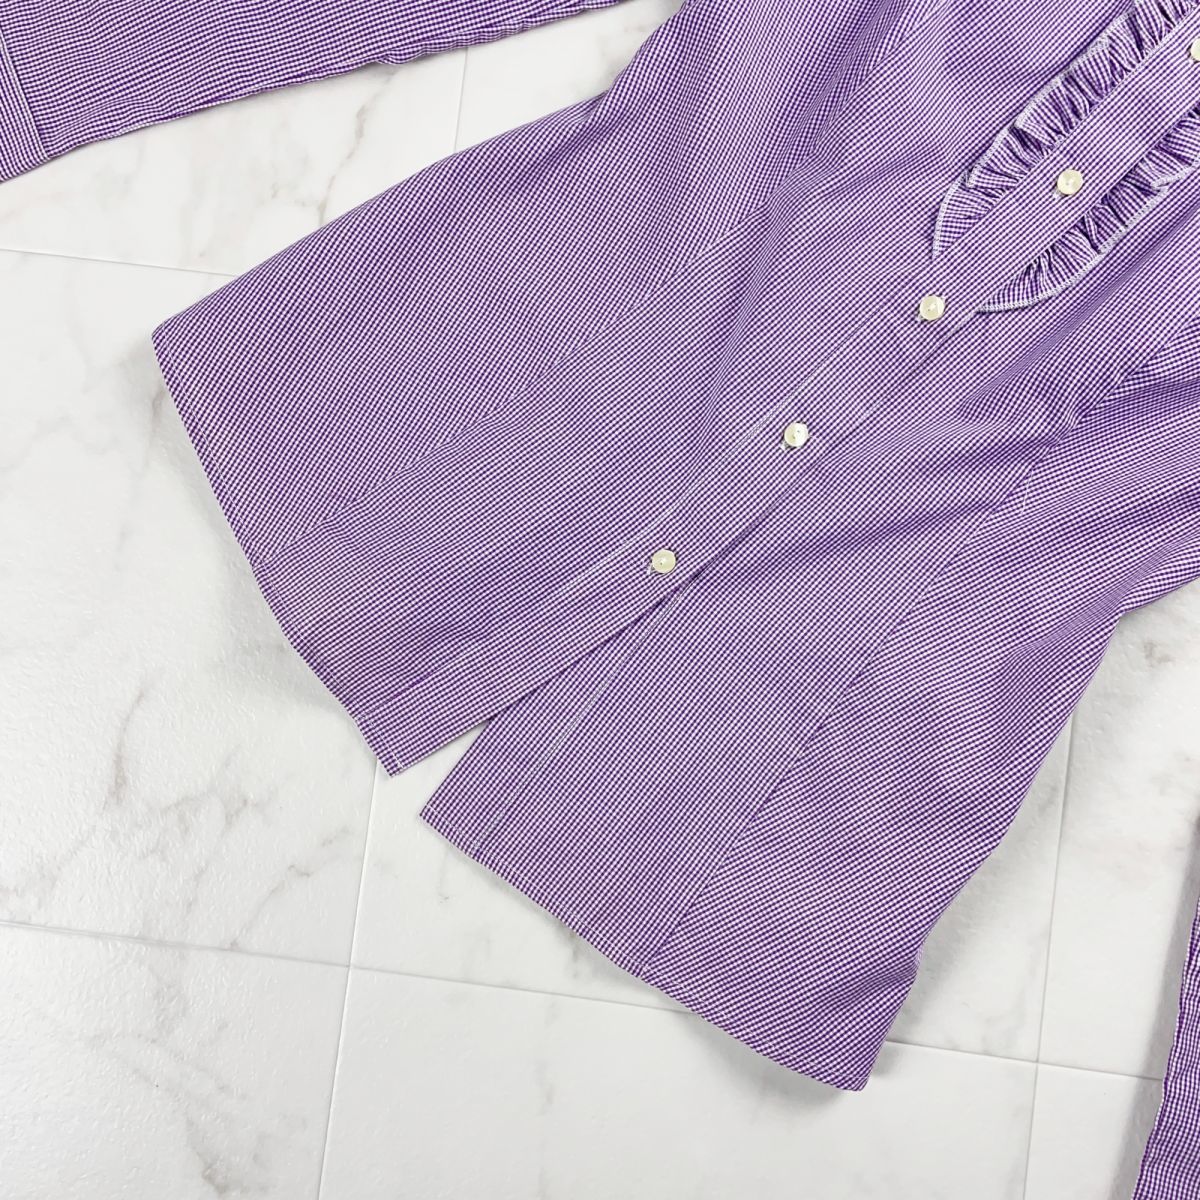  beautiful goods BENETTON Benetton silver chewing gum check frill design cotton shirt tops lady's purple purple size XS*MC705